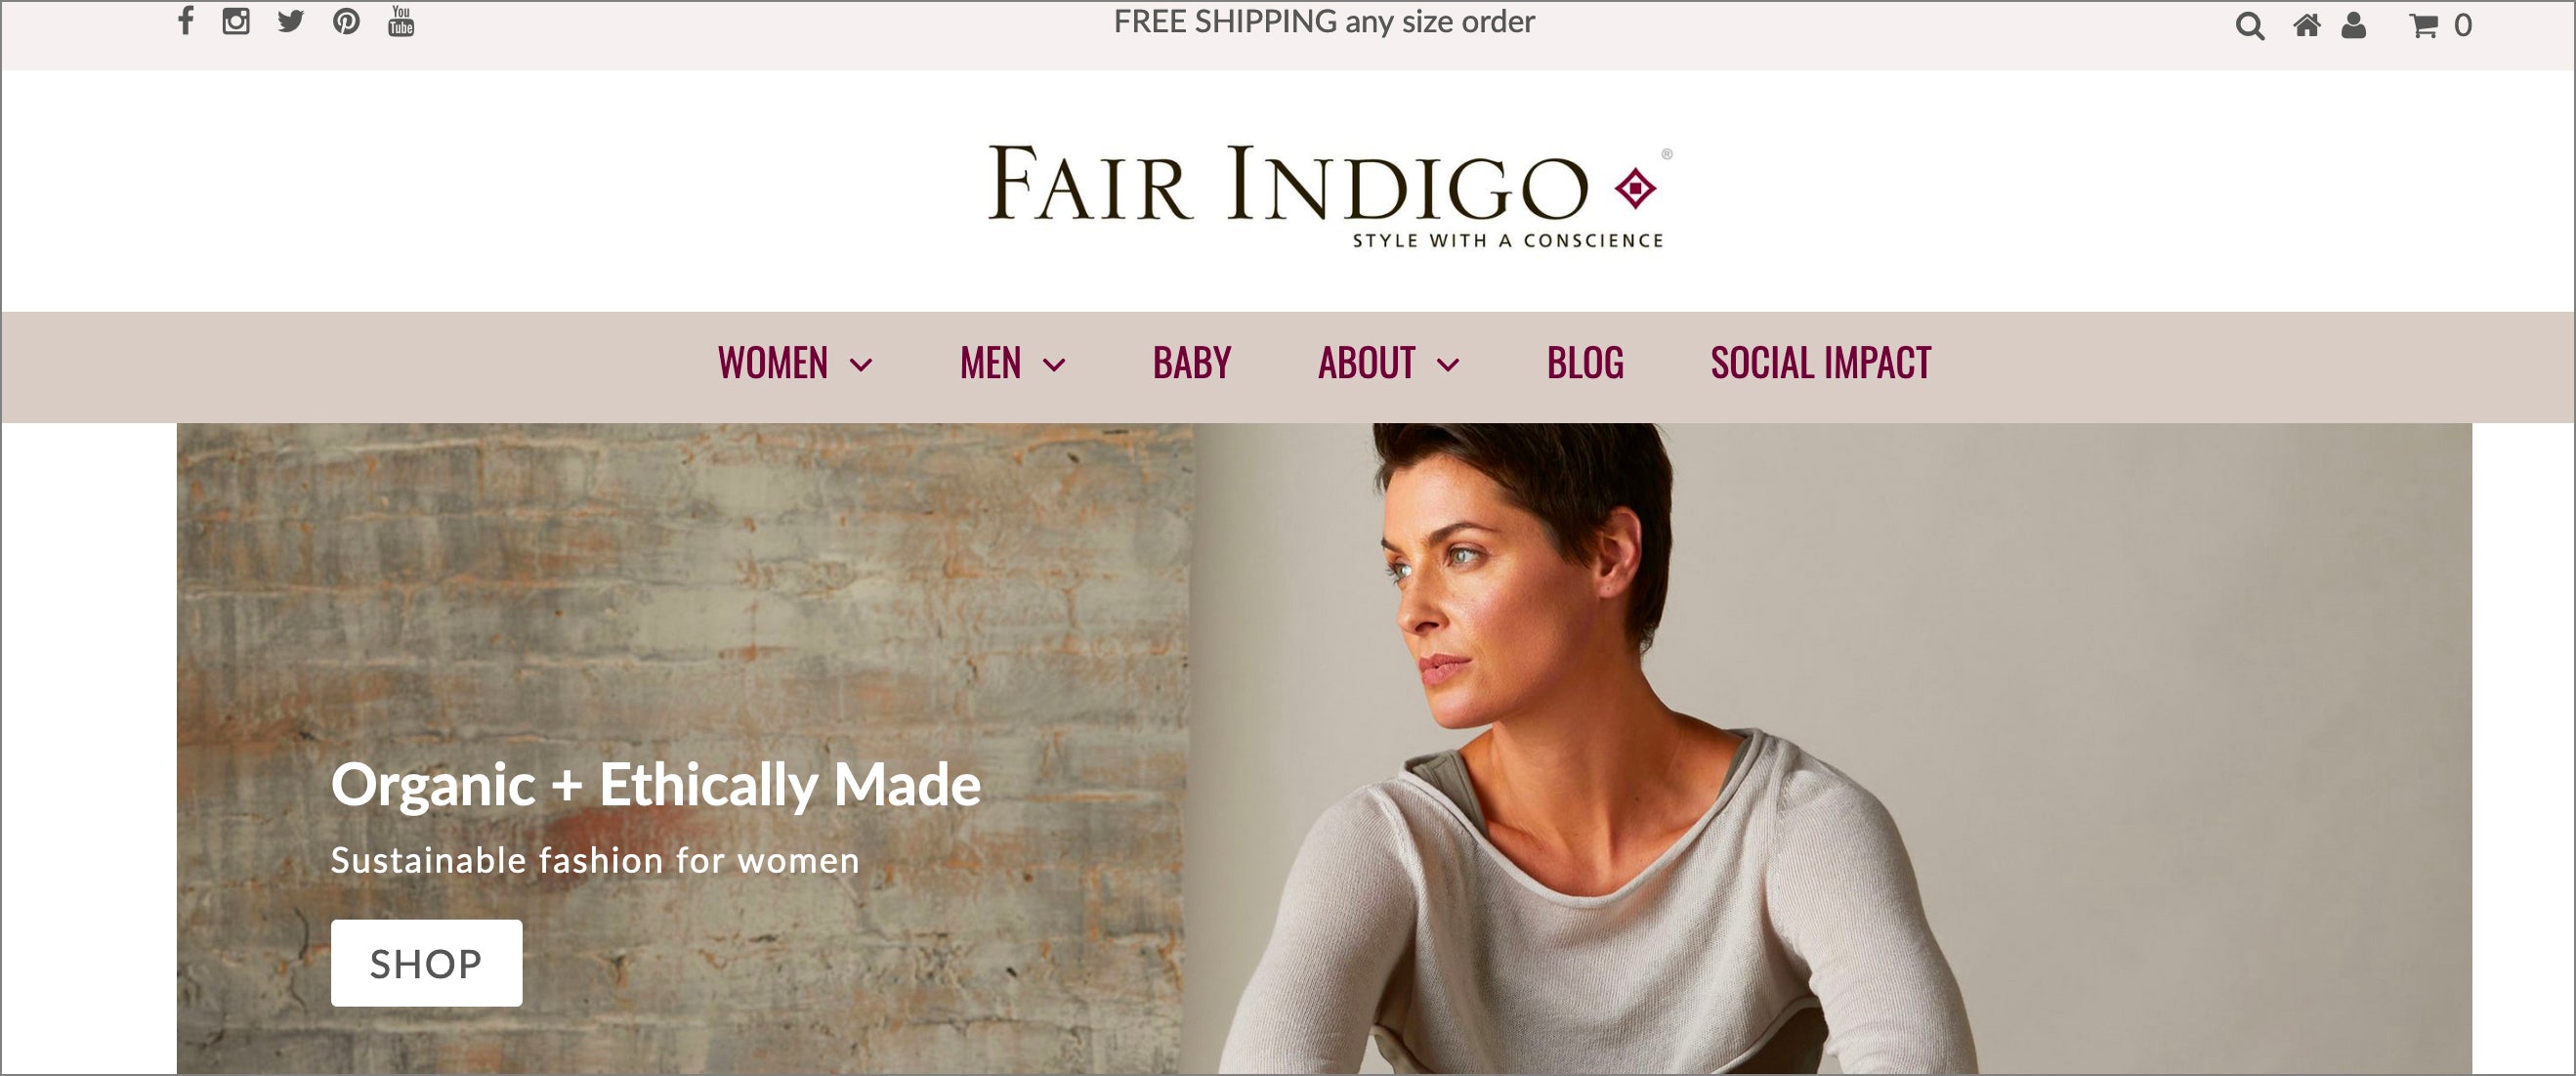 fair indigo website